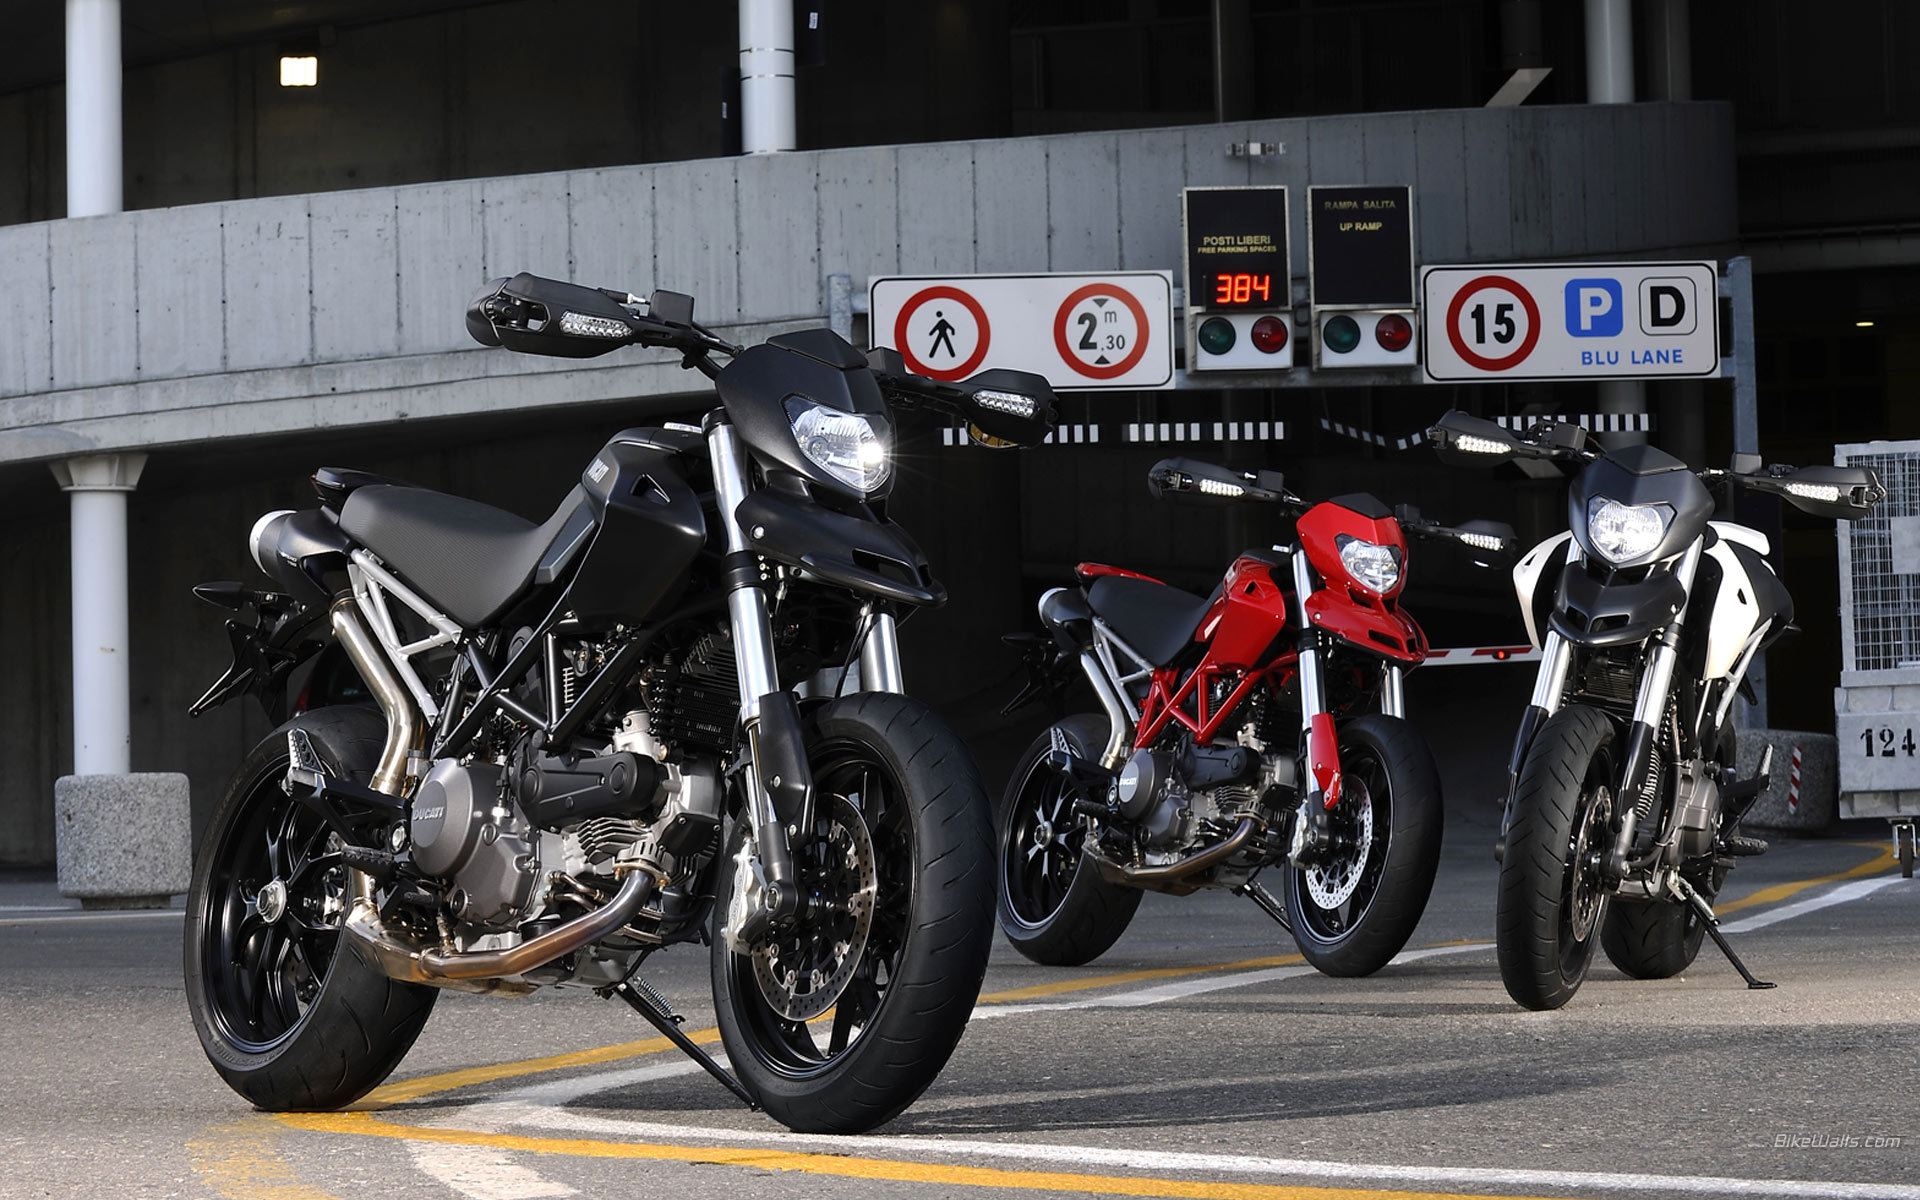 Télécharger des fonds d'écran Ducati Hyperstrada HD